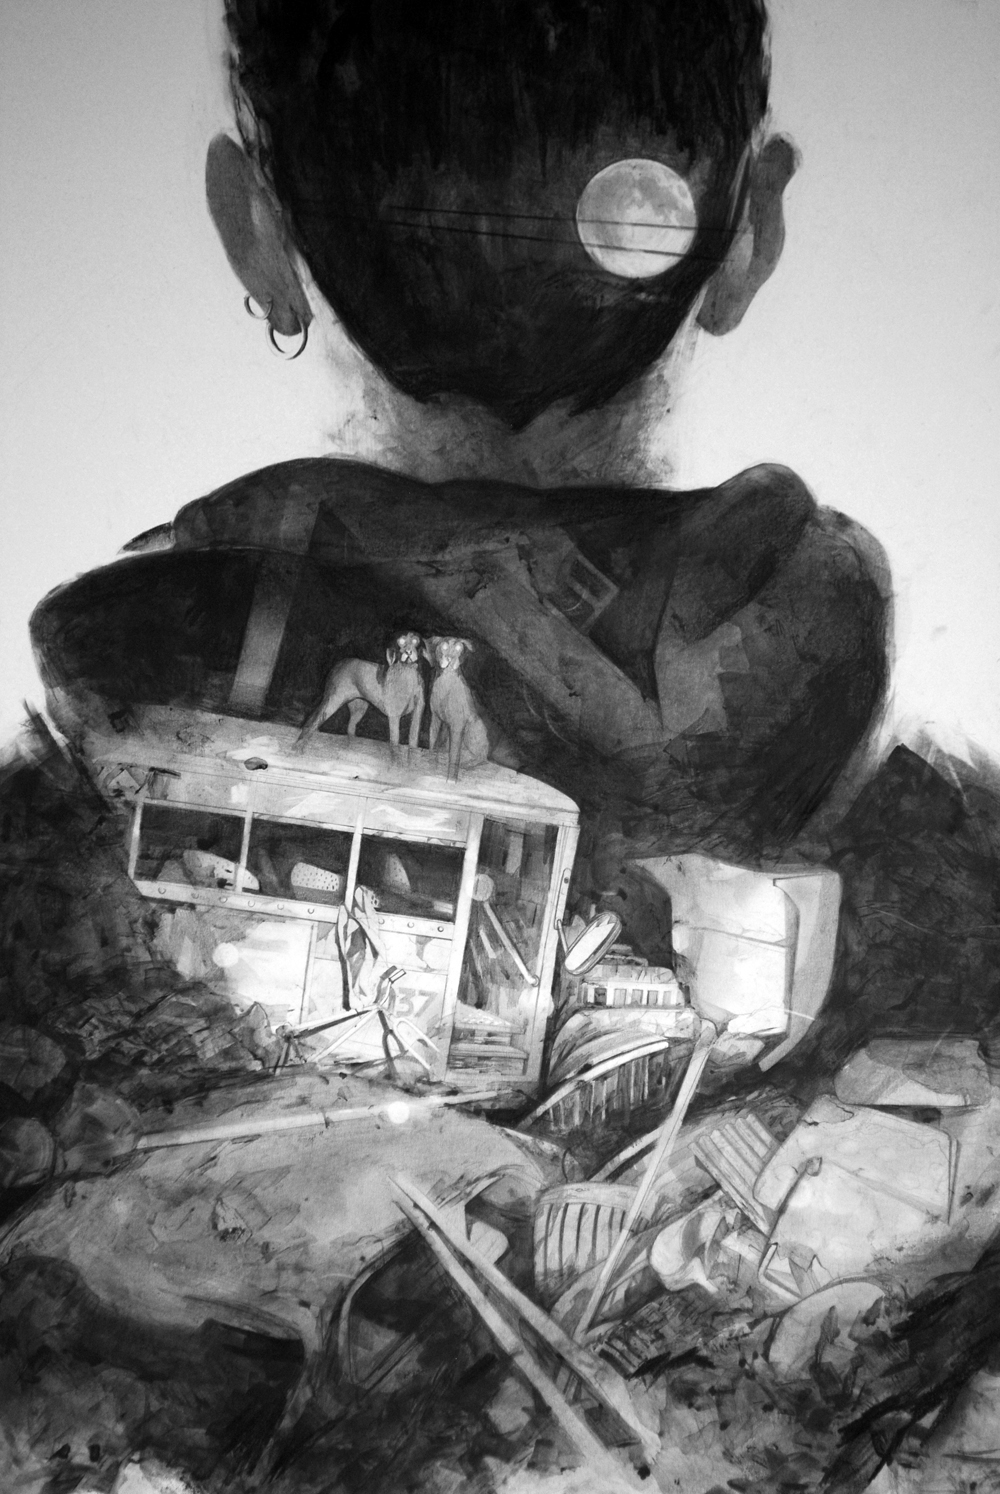 portrait slum night dogs Flash rubbish graphite black artgraf thomas cian double exposure